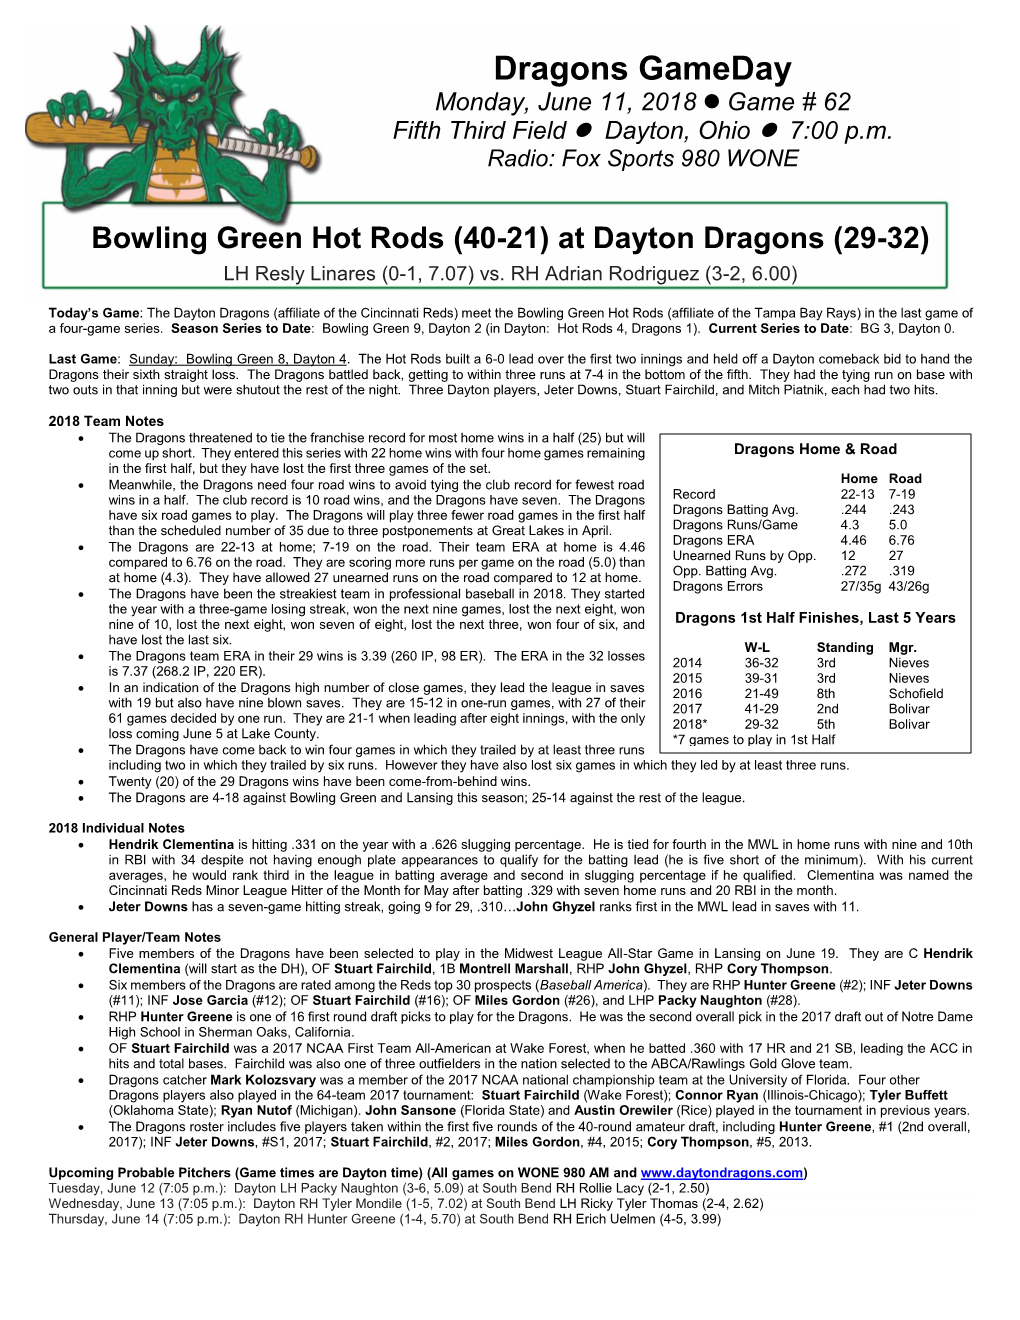 Dragons Gameday Monday, June 11, 2018  Game # 62 Fifth Third Field  Dayton, Ohio  7:00 P.M